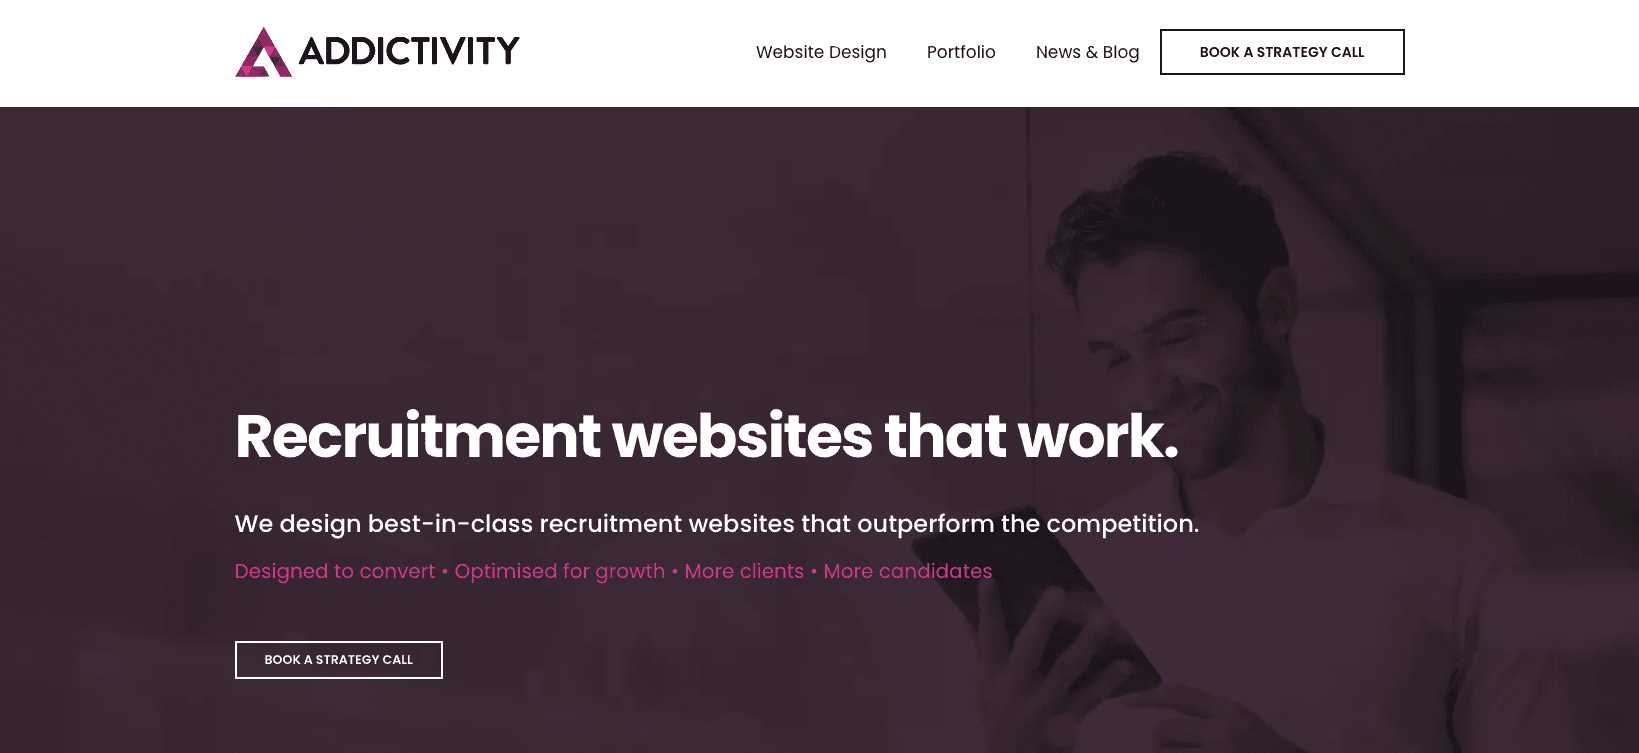 Screenshot of Addictivitys Web Recruitment Agency Site